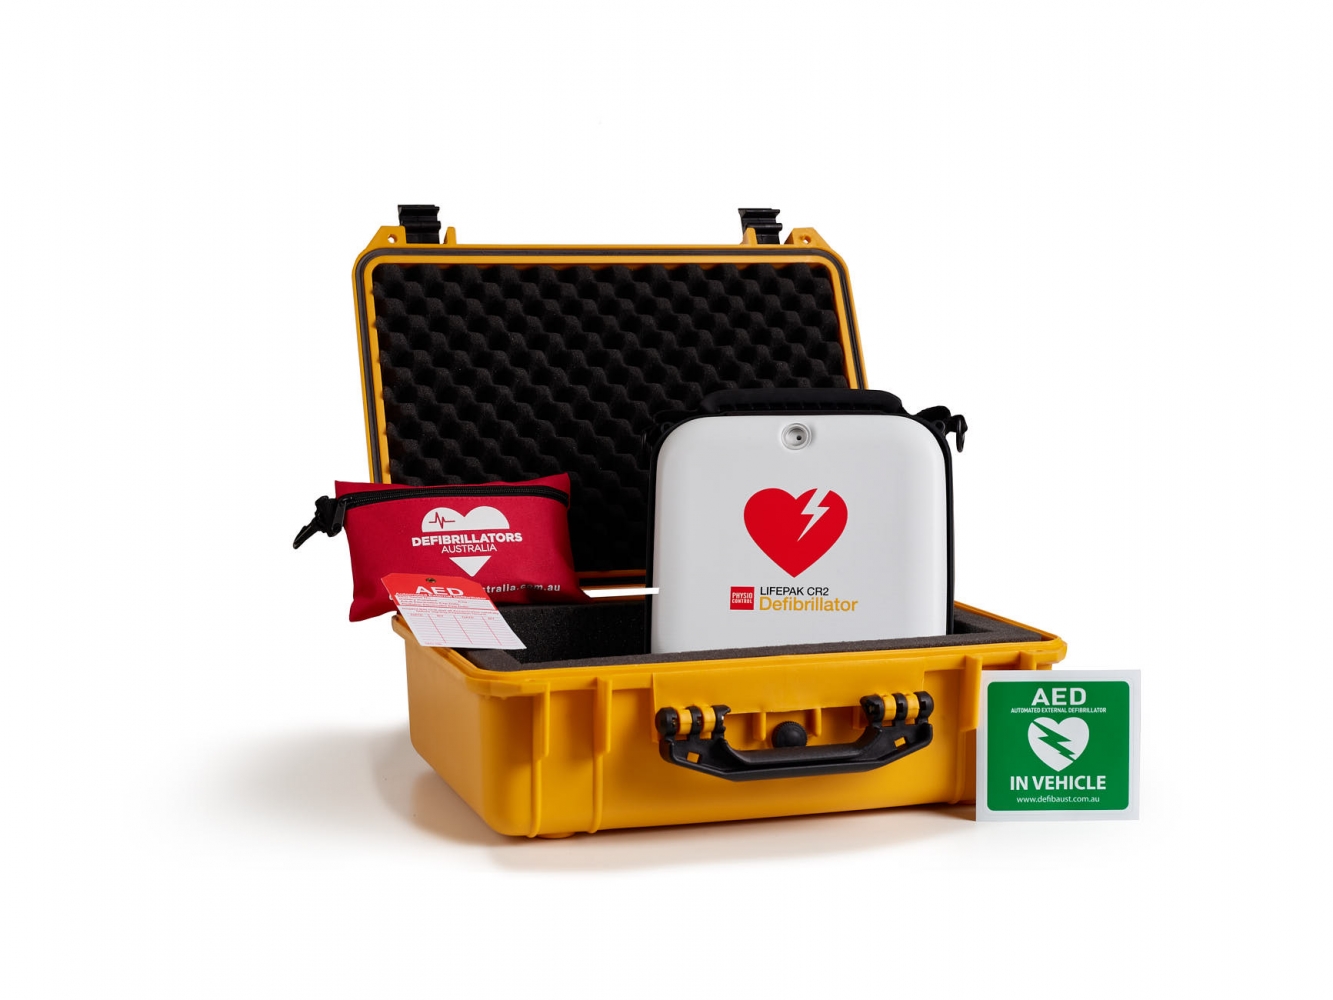 Defibrillators Australia-Difibrillator-Product Photography-Website Photography-Branding Photography